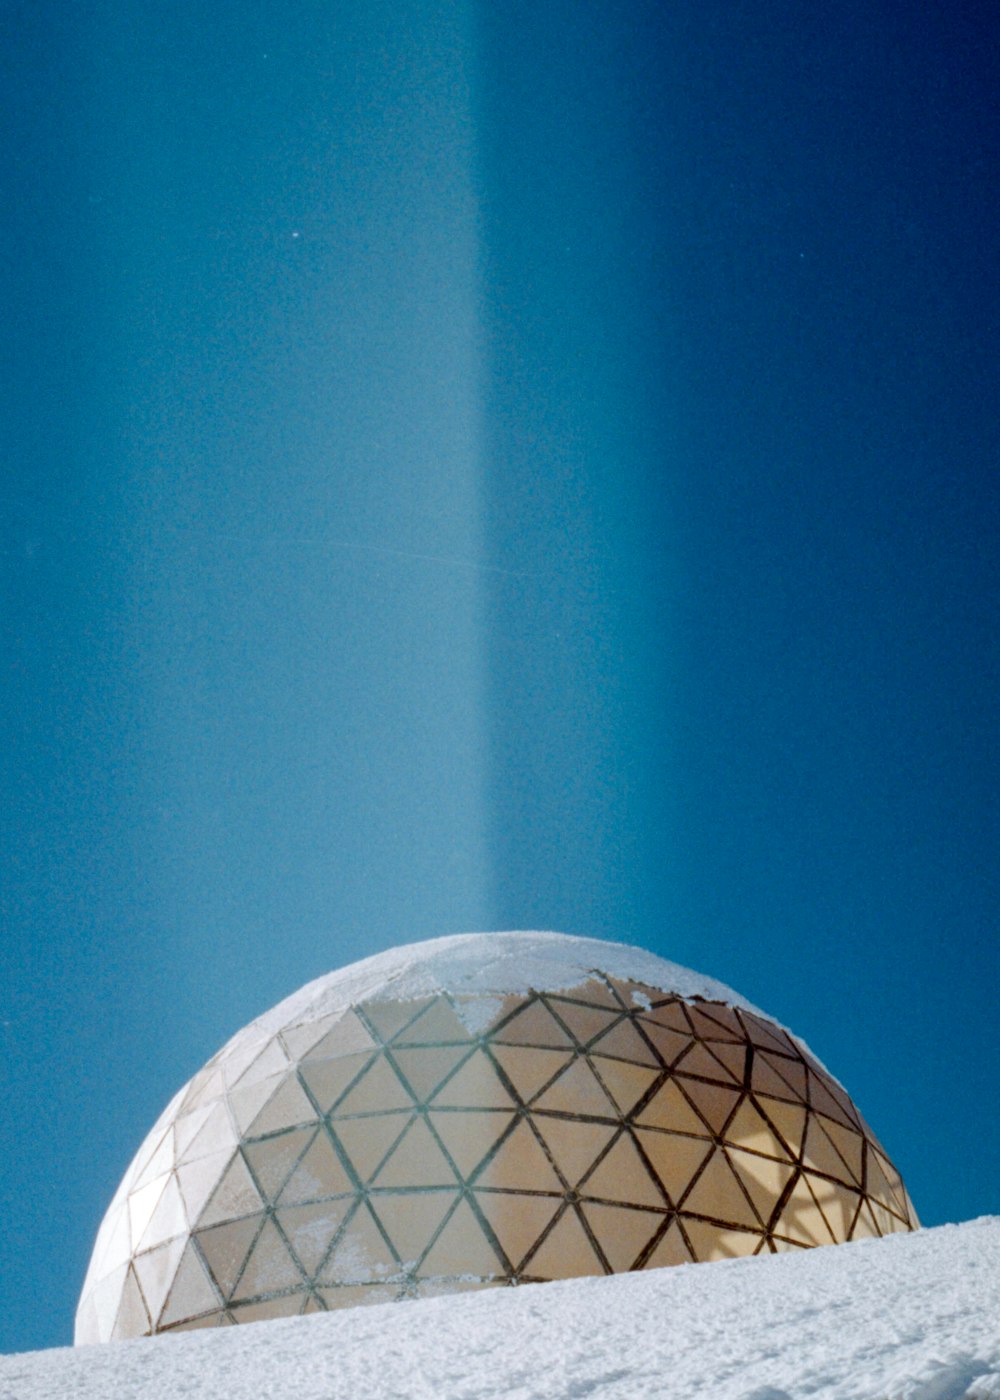 white round ball on blue background